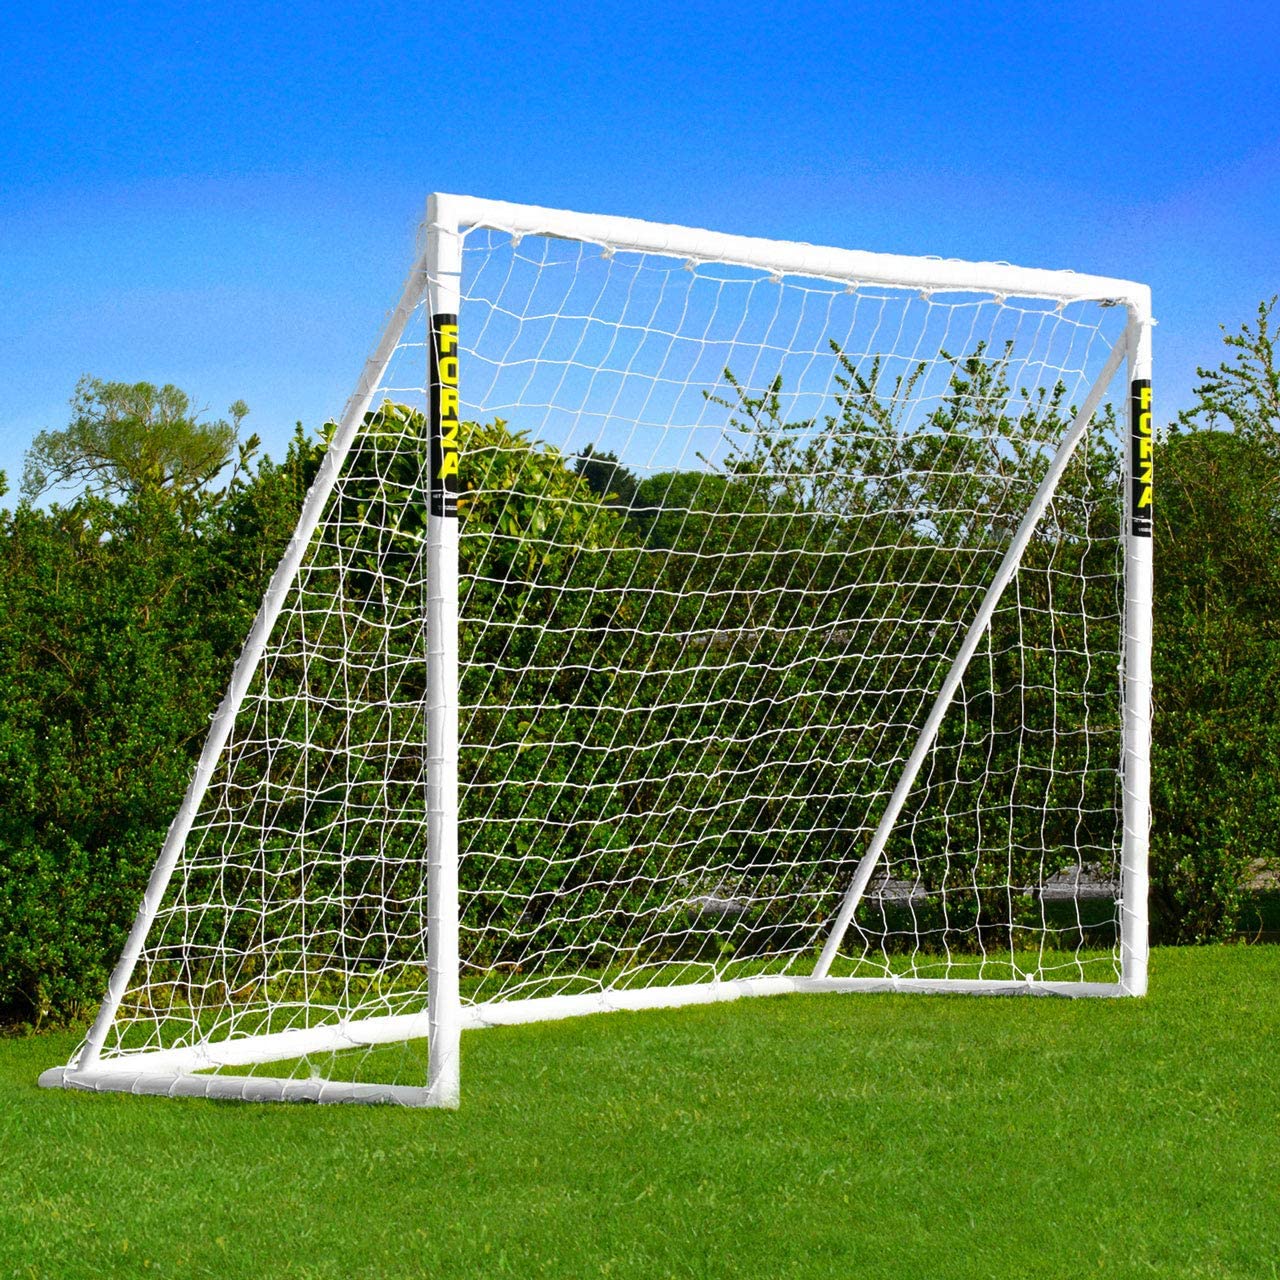 Portable Goal Soccer Steel Frame 12' x 6' Football Net Quick Ball Sport Training 